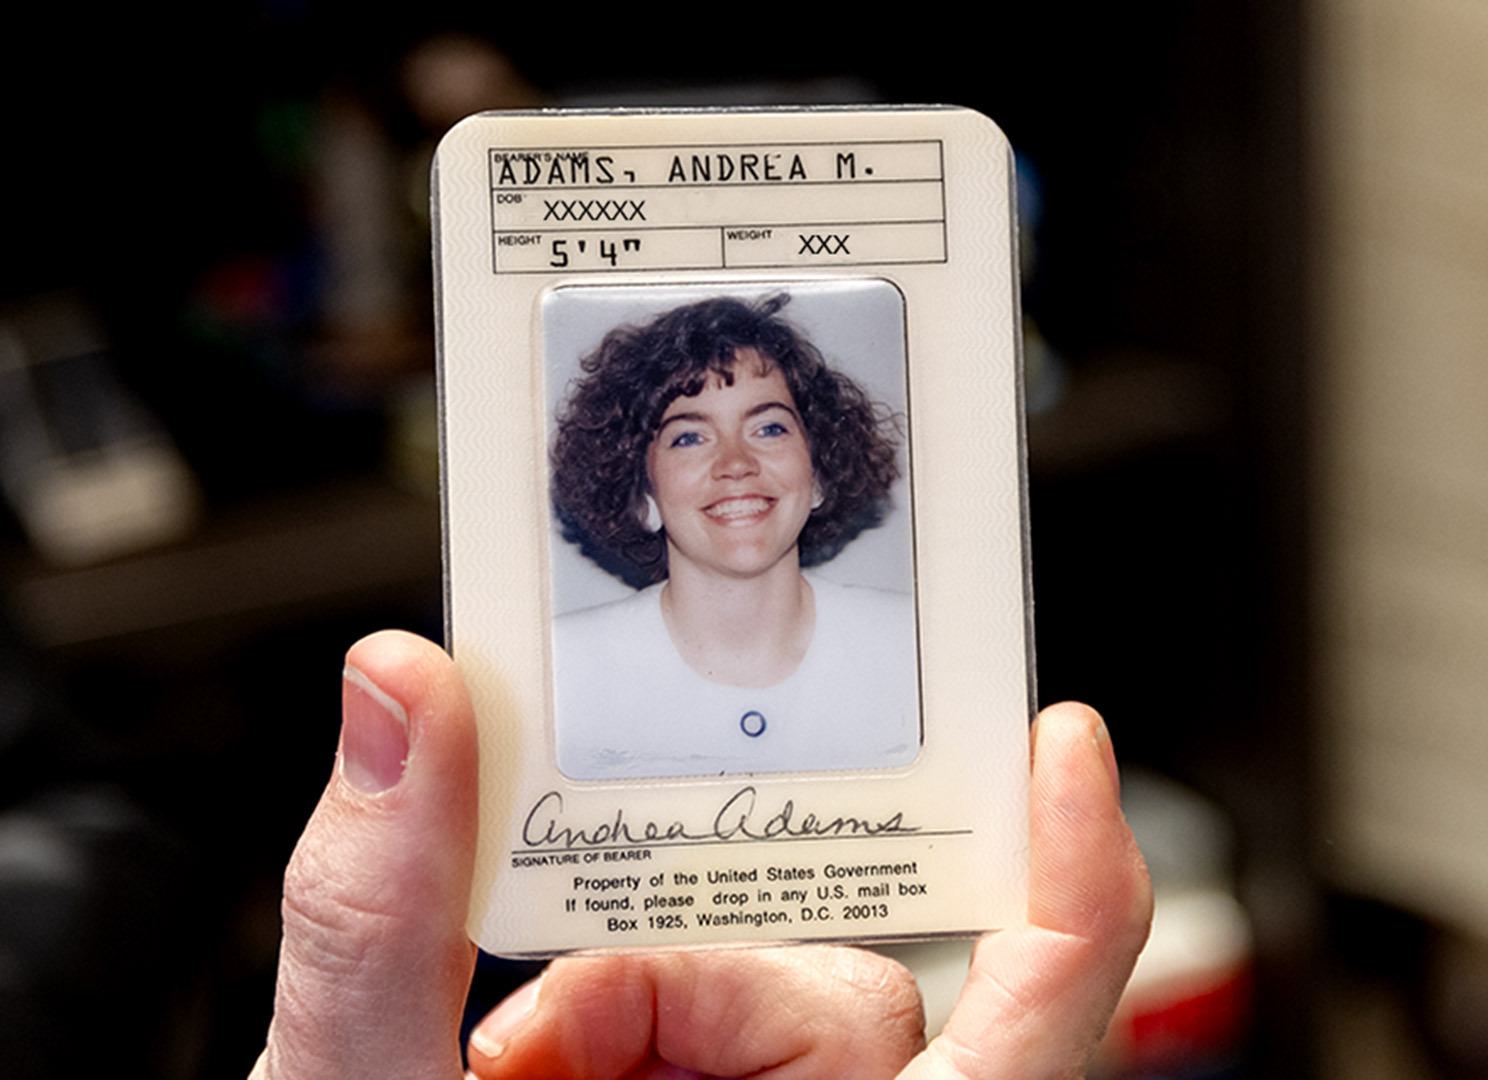 Andrea Crabb's CIA badge